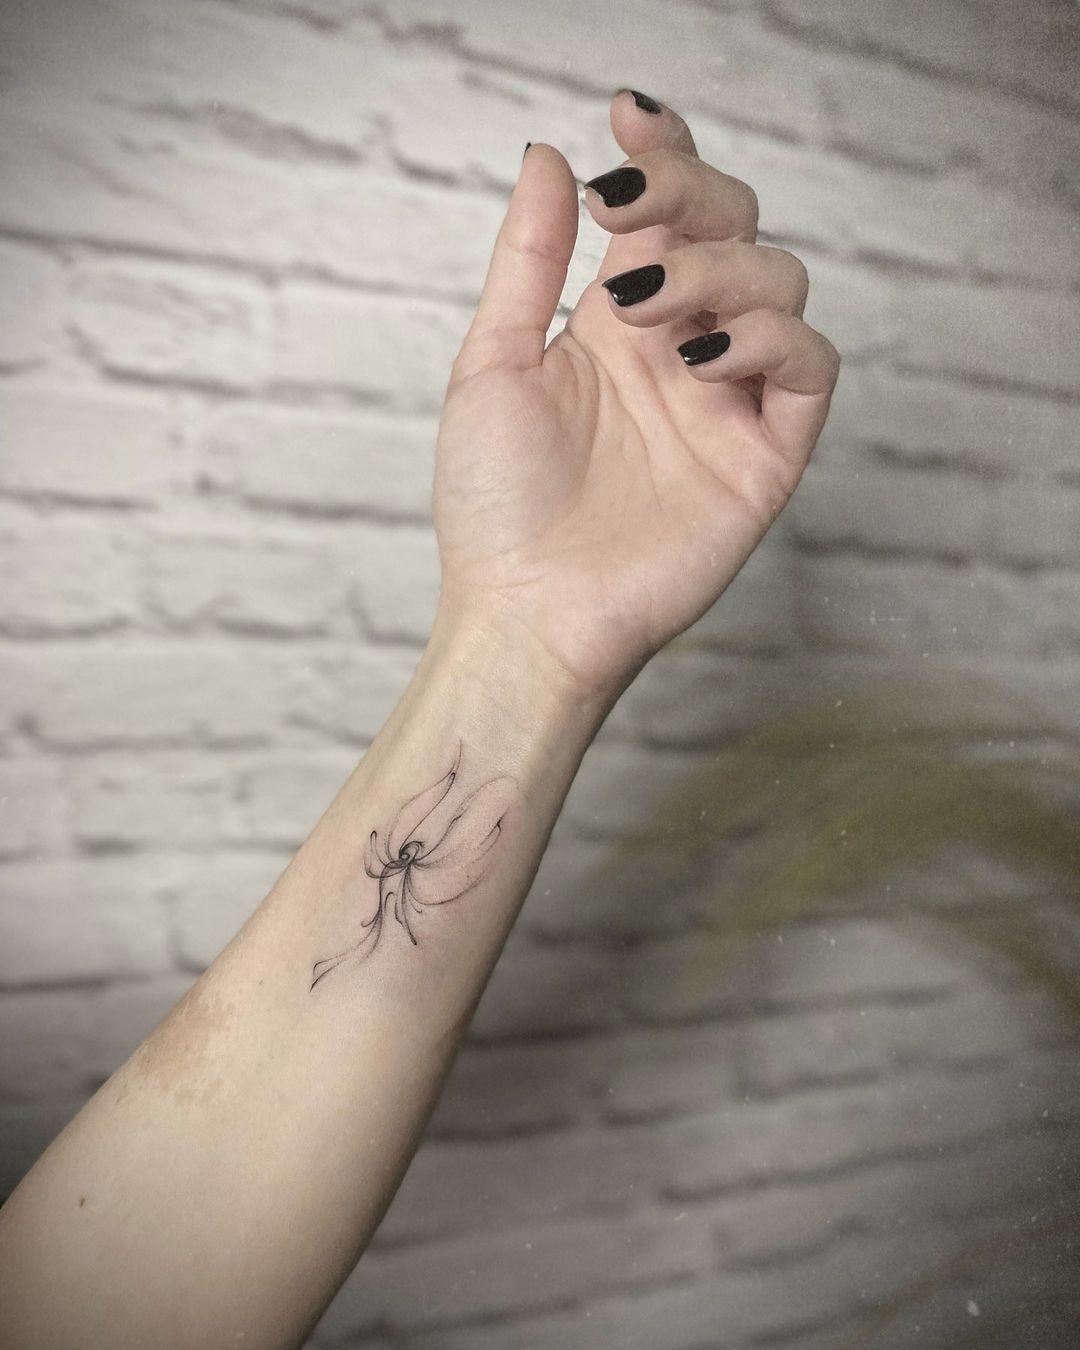 Tattoo abstracto del ave fénix en antebrazo